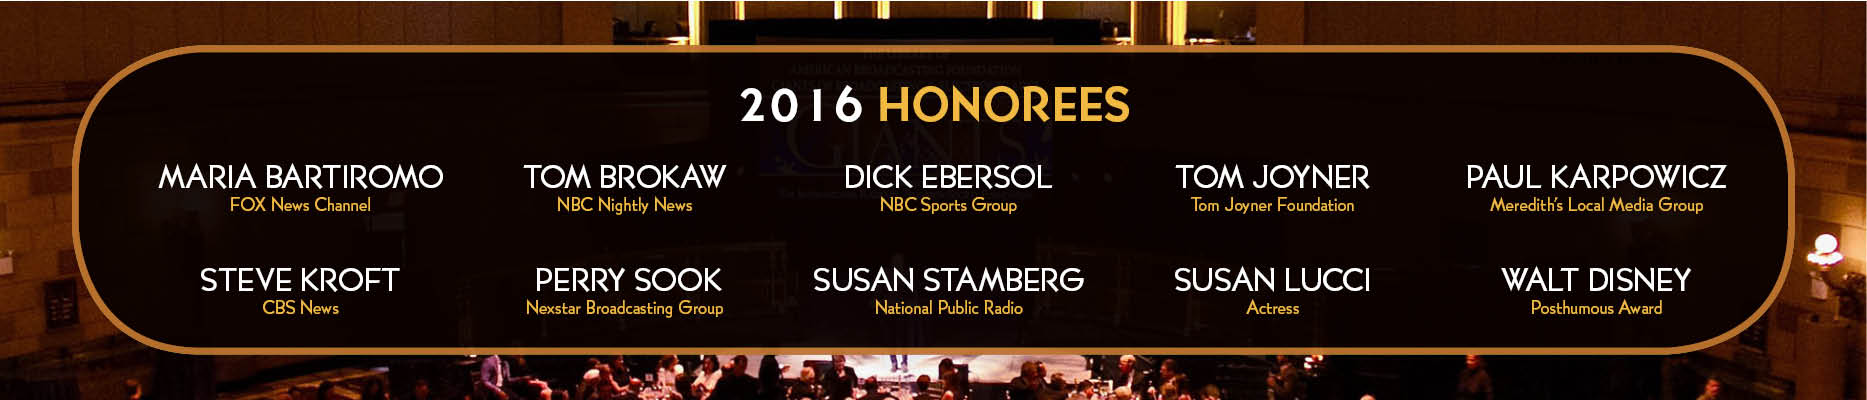 2016 Honorees